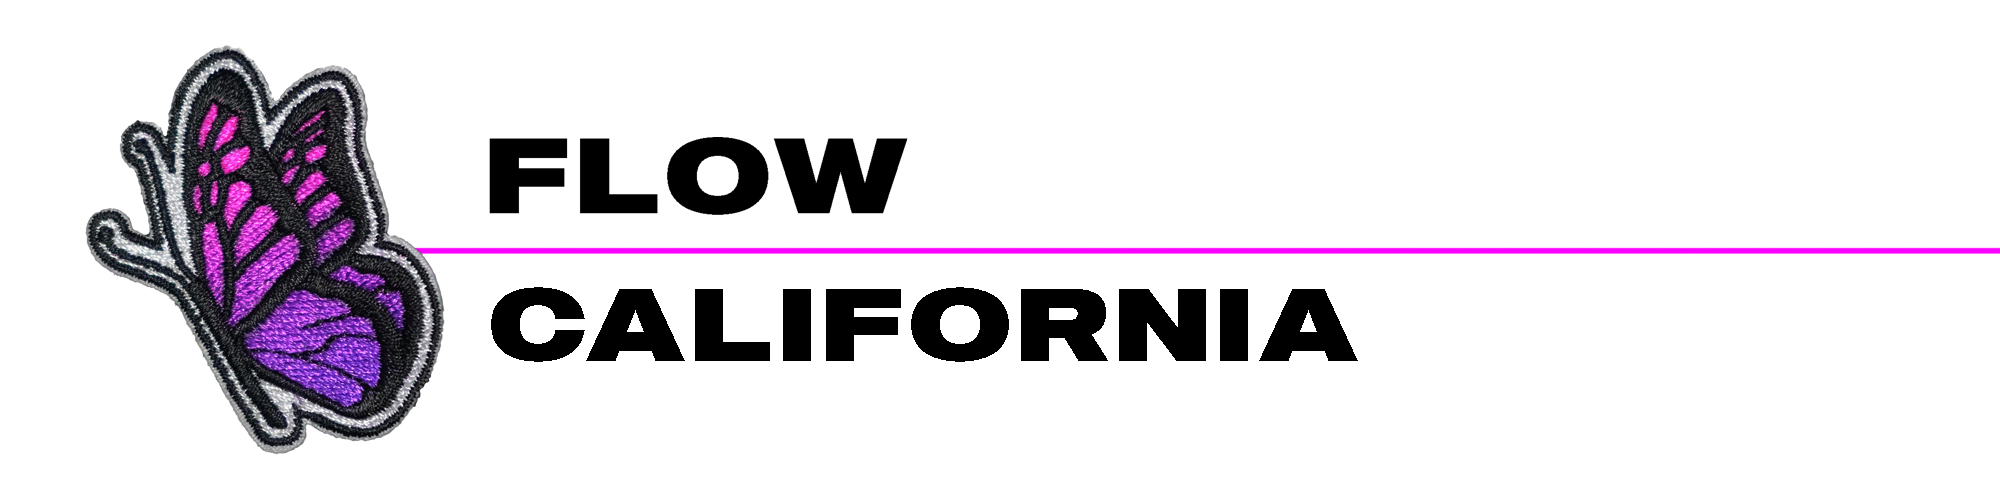 Flow California Header